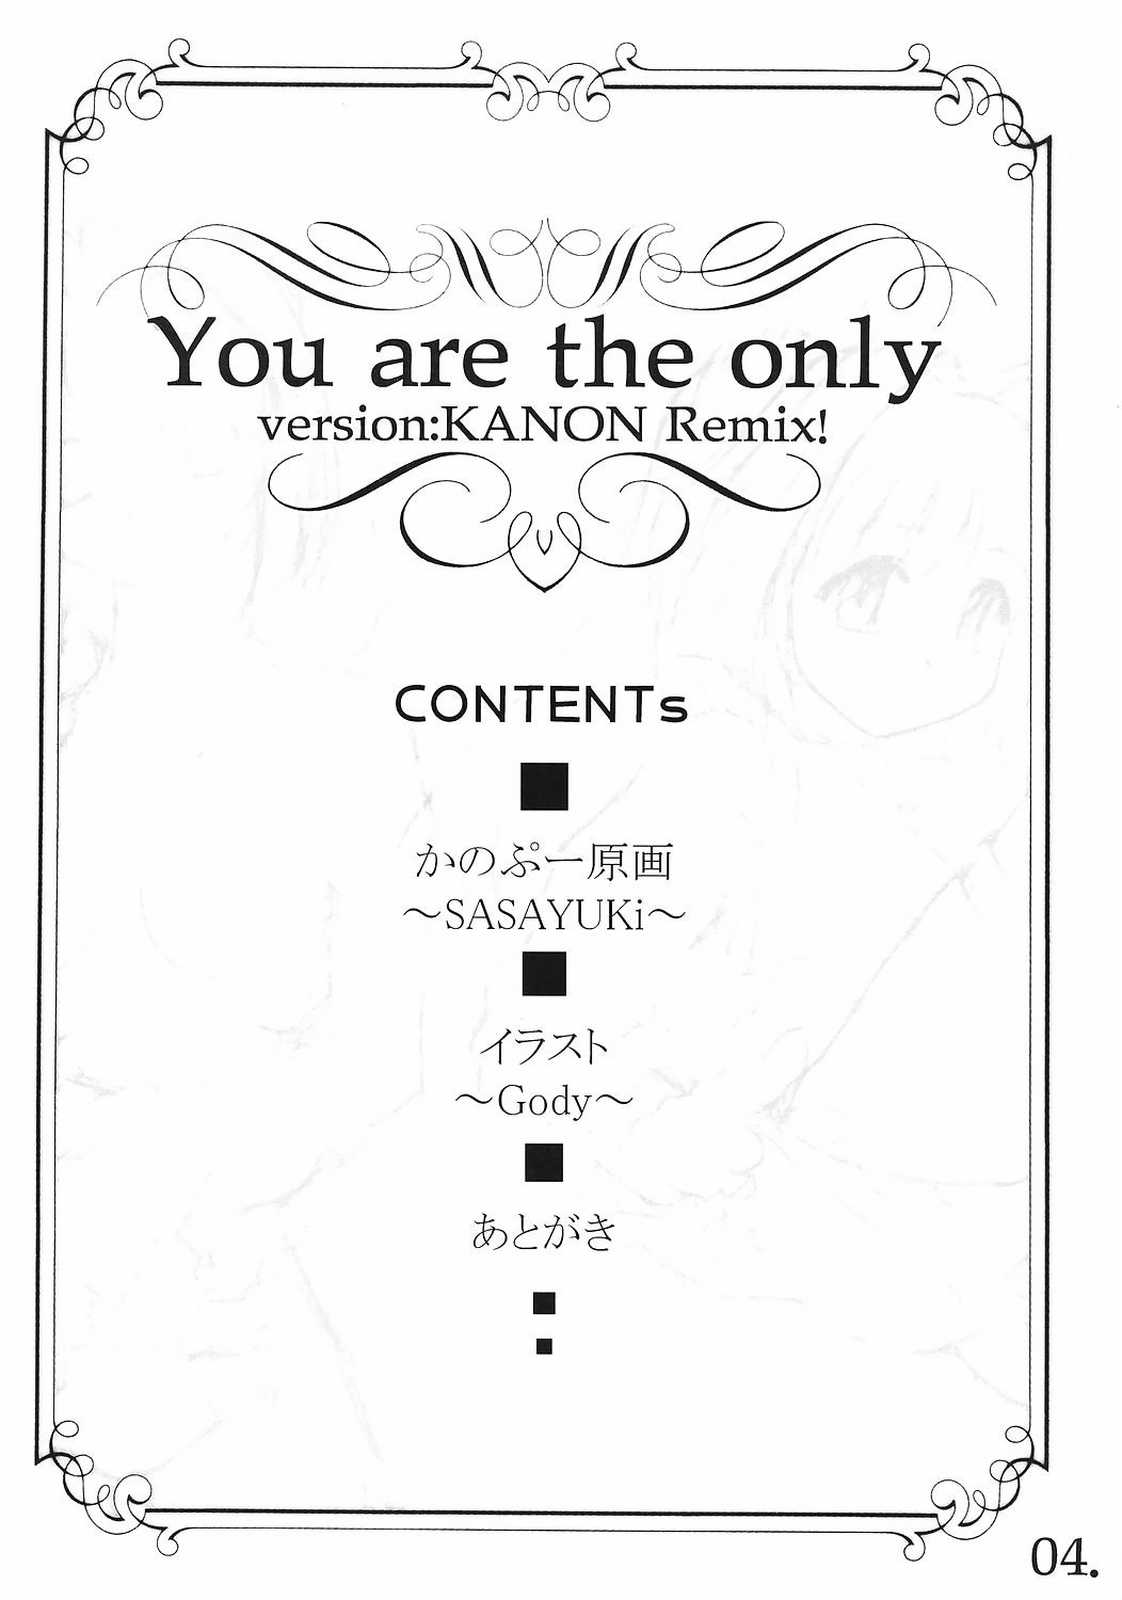 (CR31) [G-Power! (Gody, SASAYUKi)] You are the only version: KANON remix (Kanon) (Cレヴォ31) [G-Power! (Gody, SASAYUKi)] You are the only version:KANON remix (カノン)